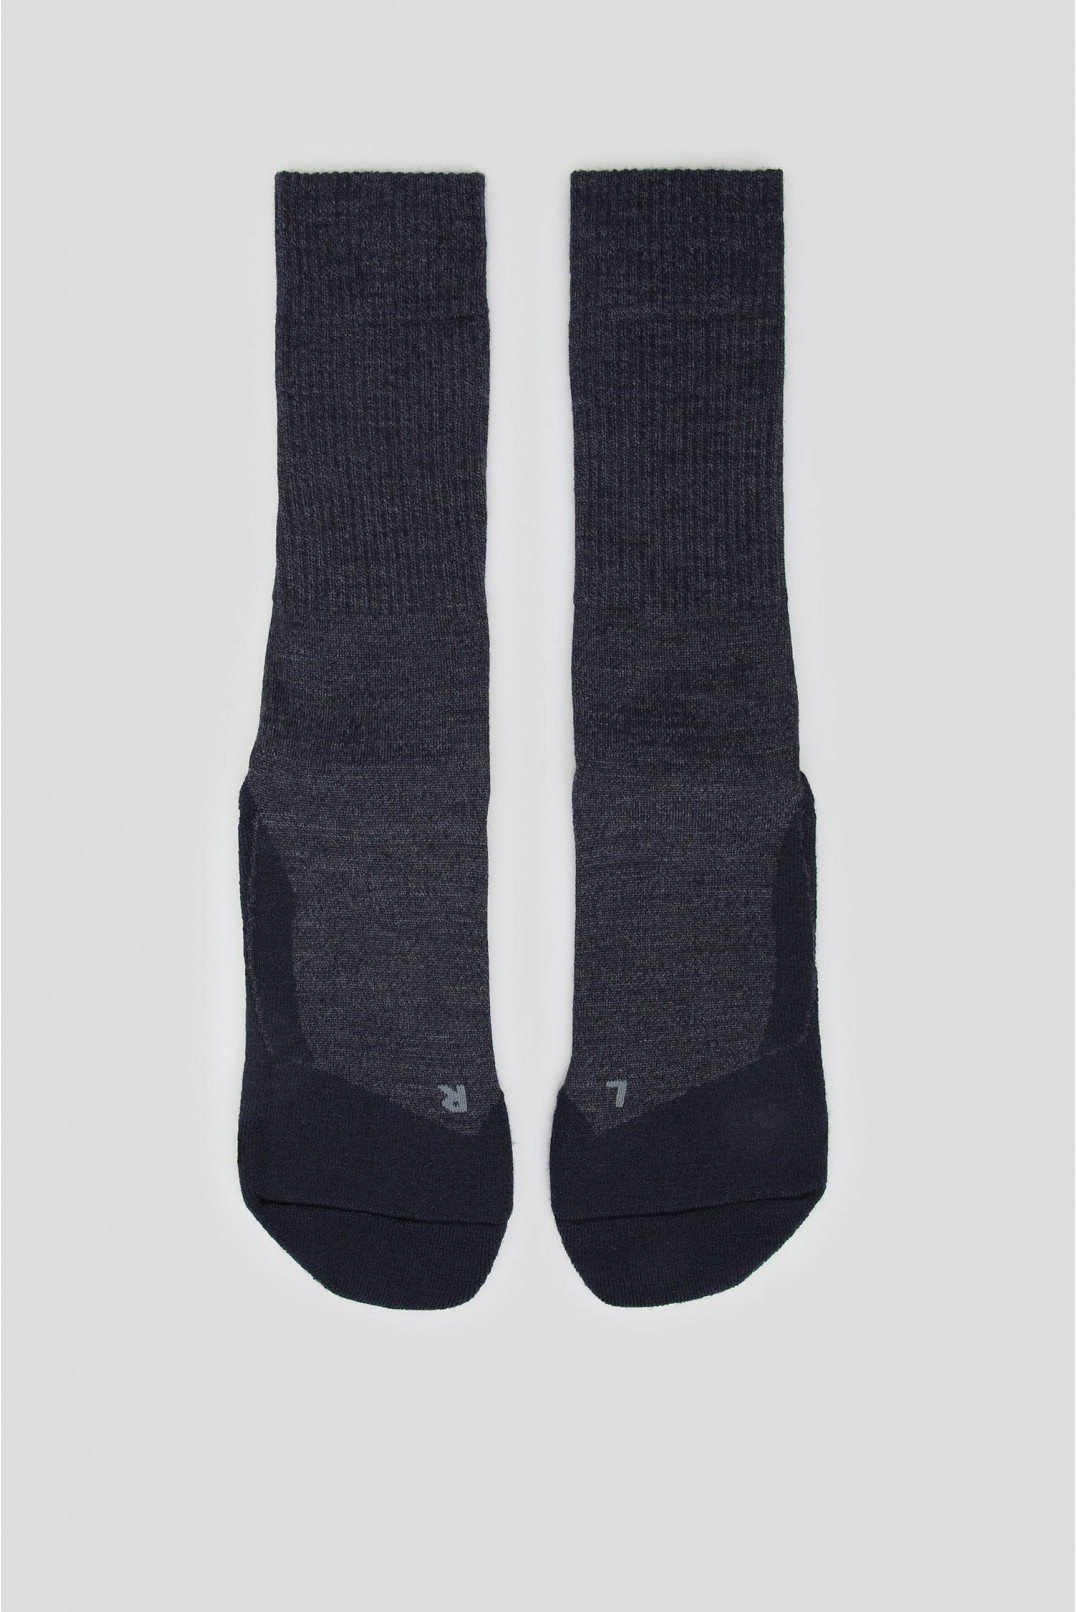 Мужские темно-синие лыжные носки TK2 WOOL 1